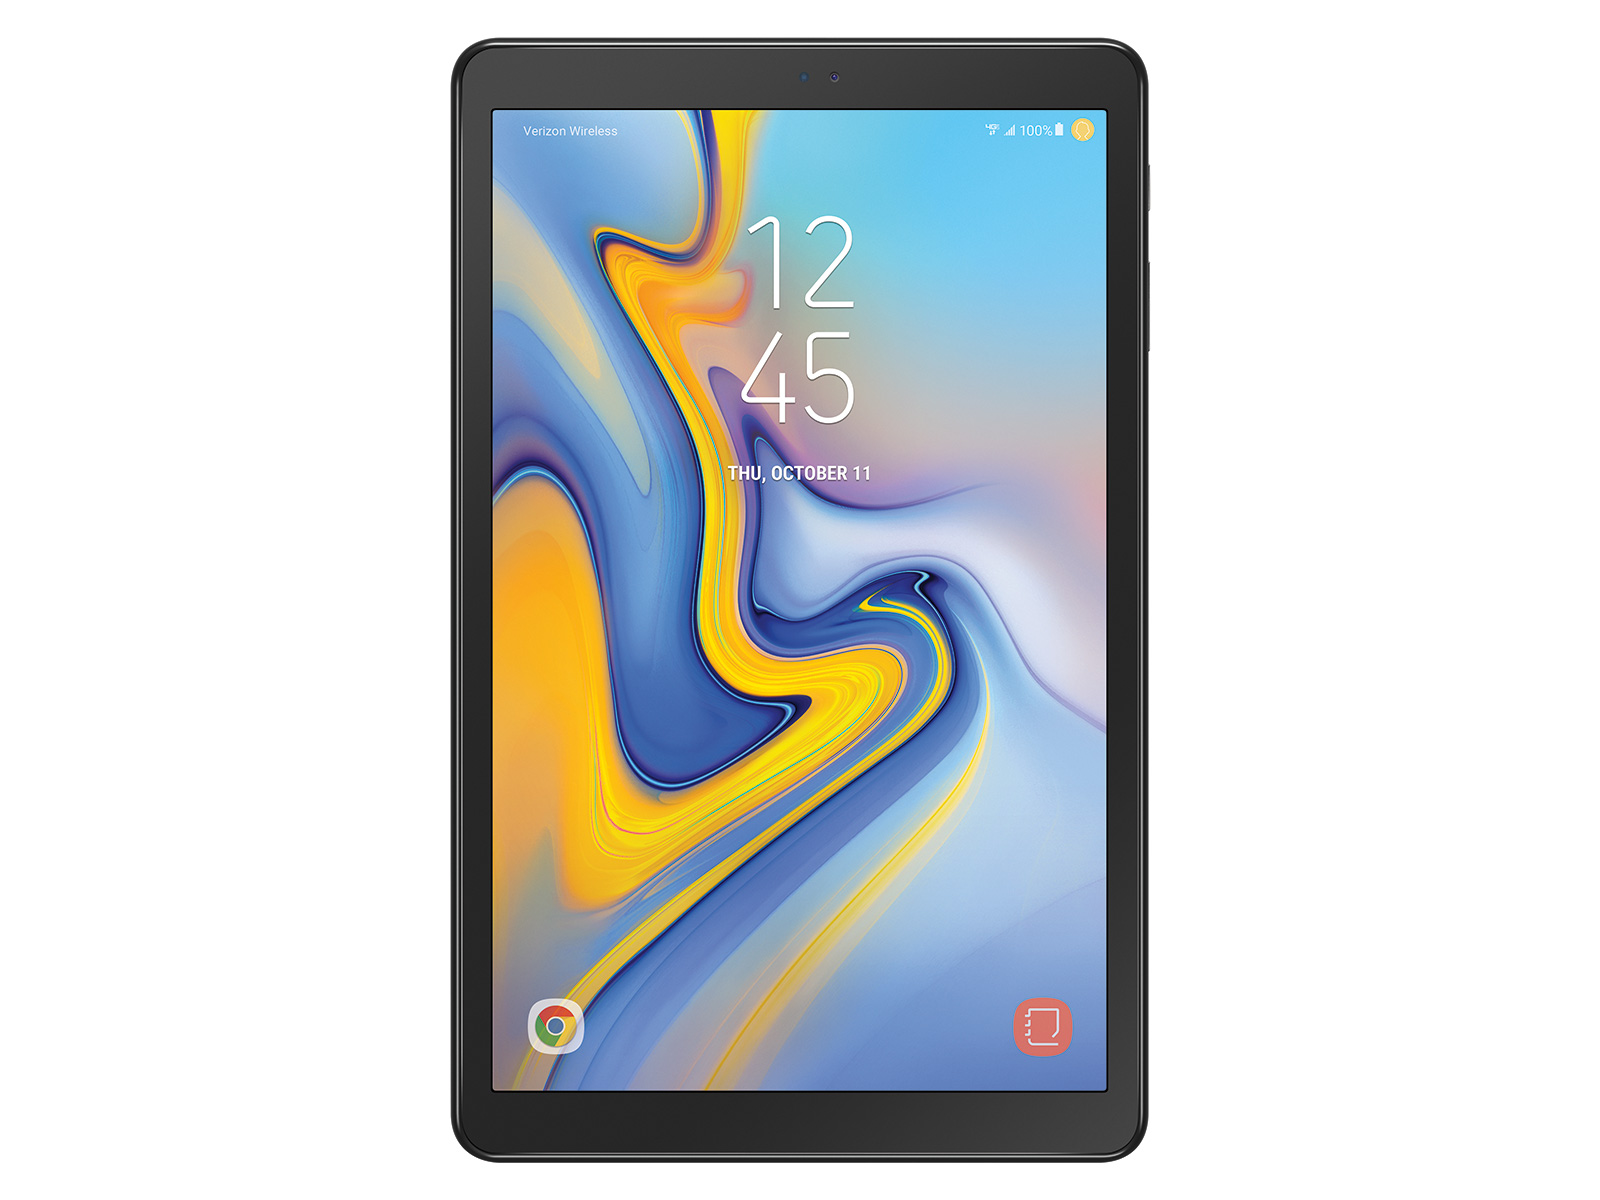 Samsung Galaxy Tab A 10.5”, 32GB, Black (Verizon) Tablets - SM-T597VZKAVZW